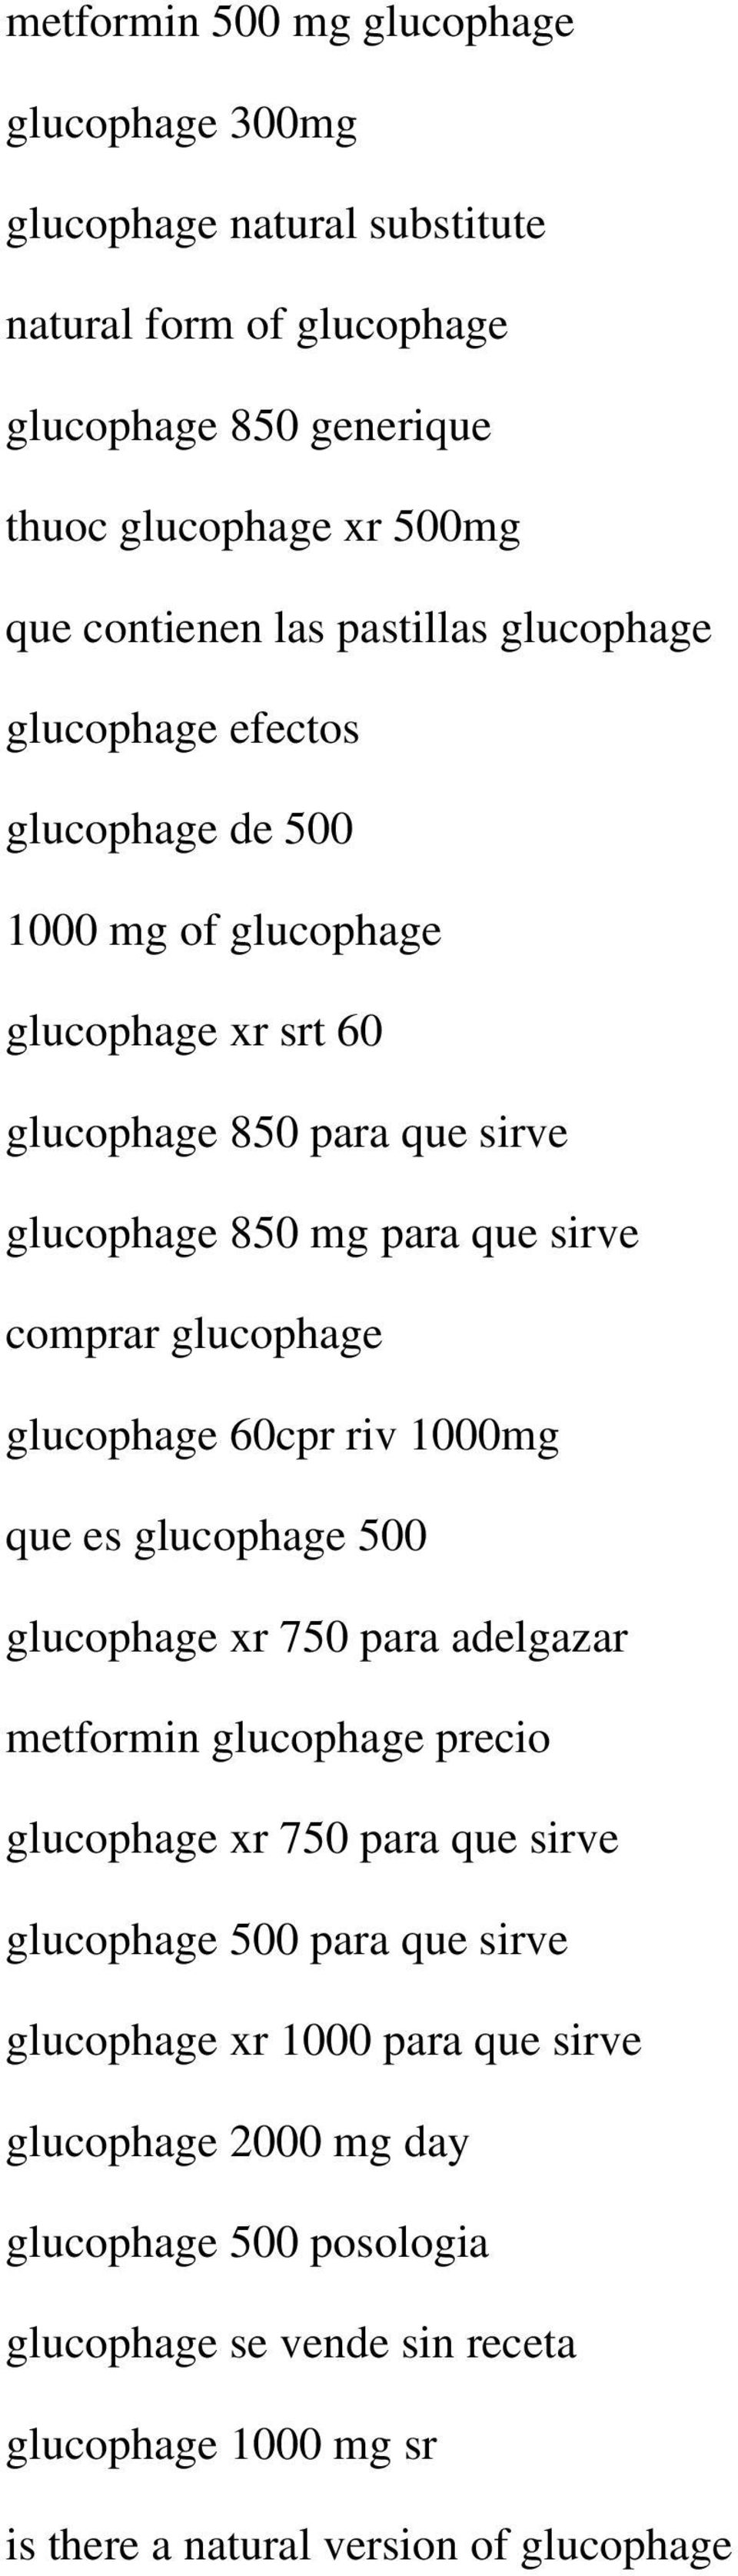 glucophage glucophage 60cpr riv 1000mg que es glucophage 500 glucophage xr 750 para adelgazar metformin glucophage precio glucophage xr 750 para que sirve glucophage 500 para